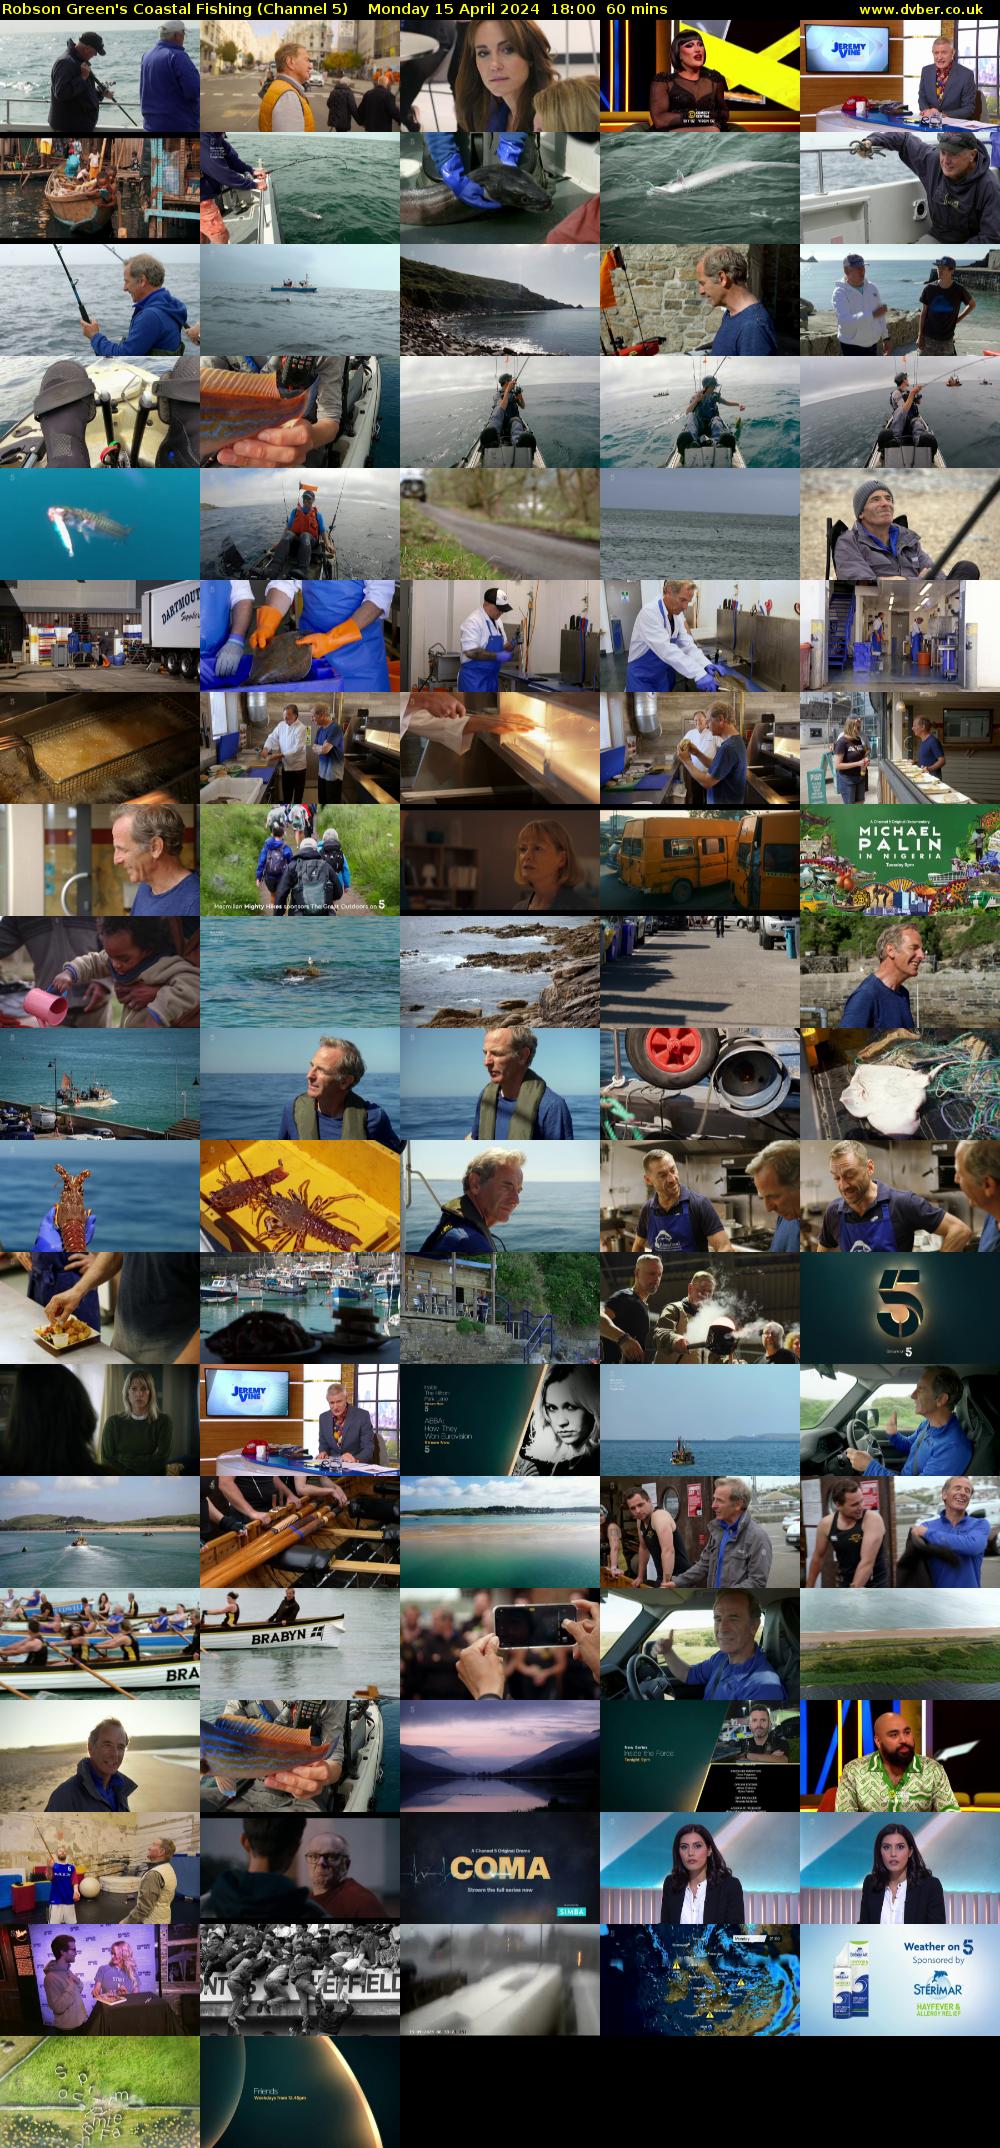 Robson Green's Coastal Fishing (Channel 5) Monday 15 April 2024 18:00 - 19:00